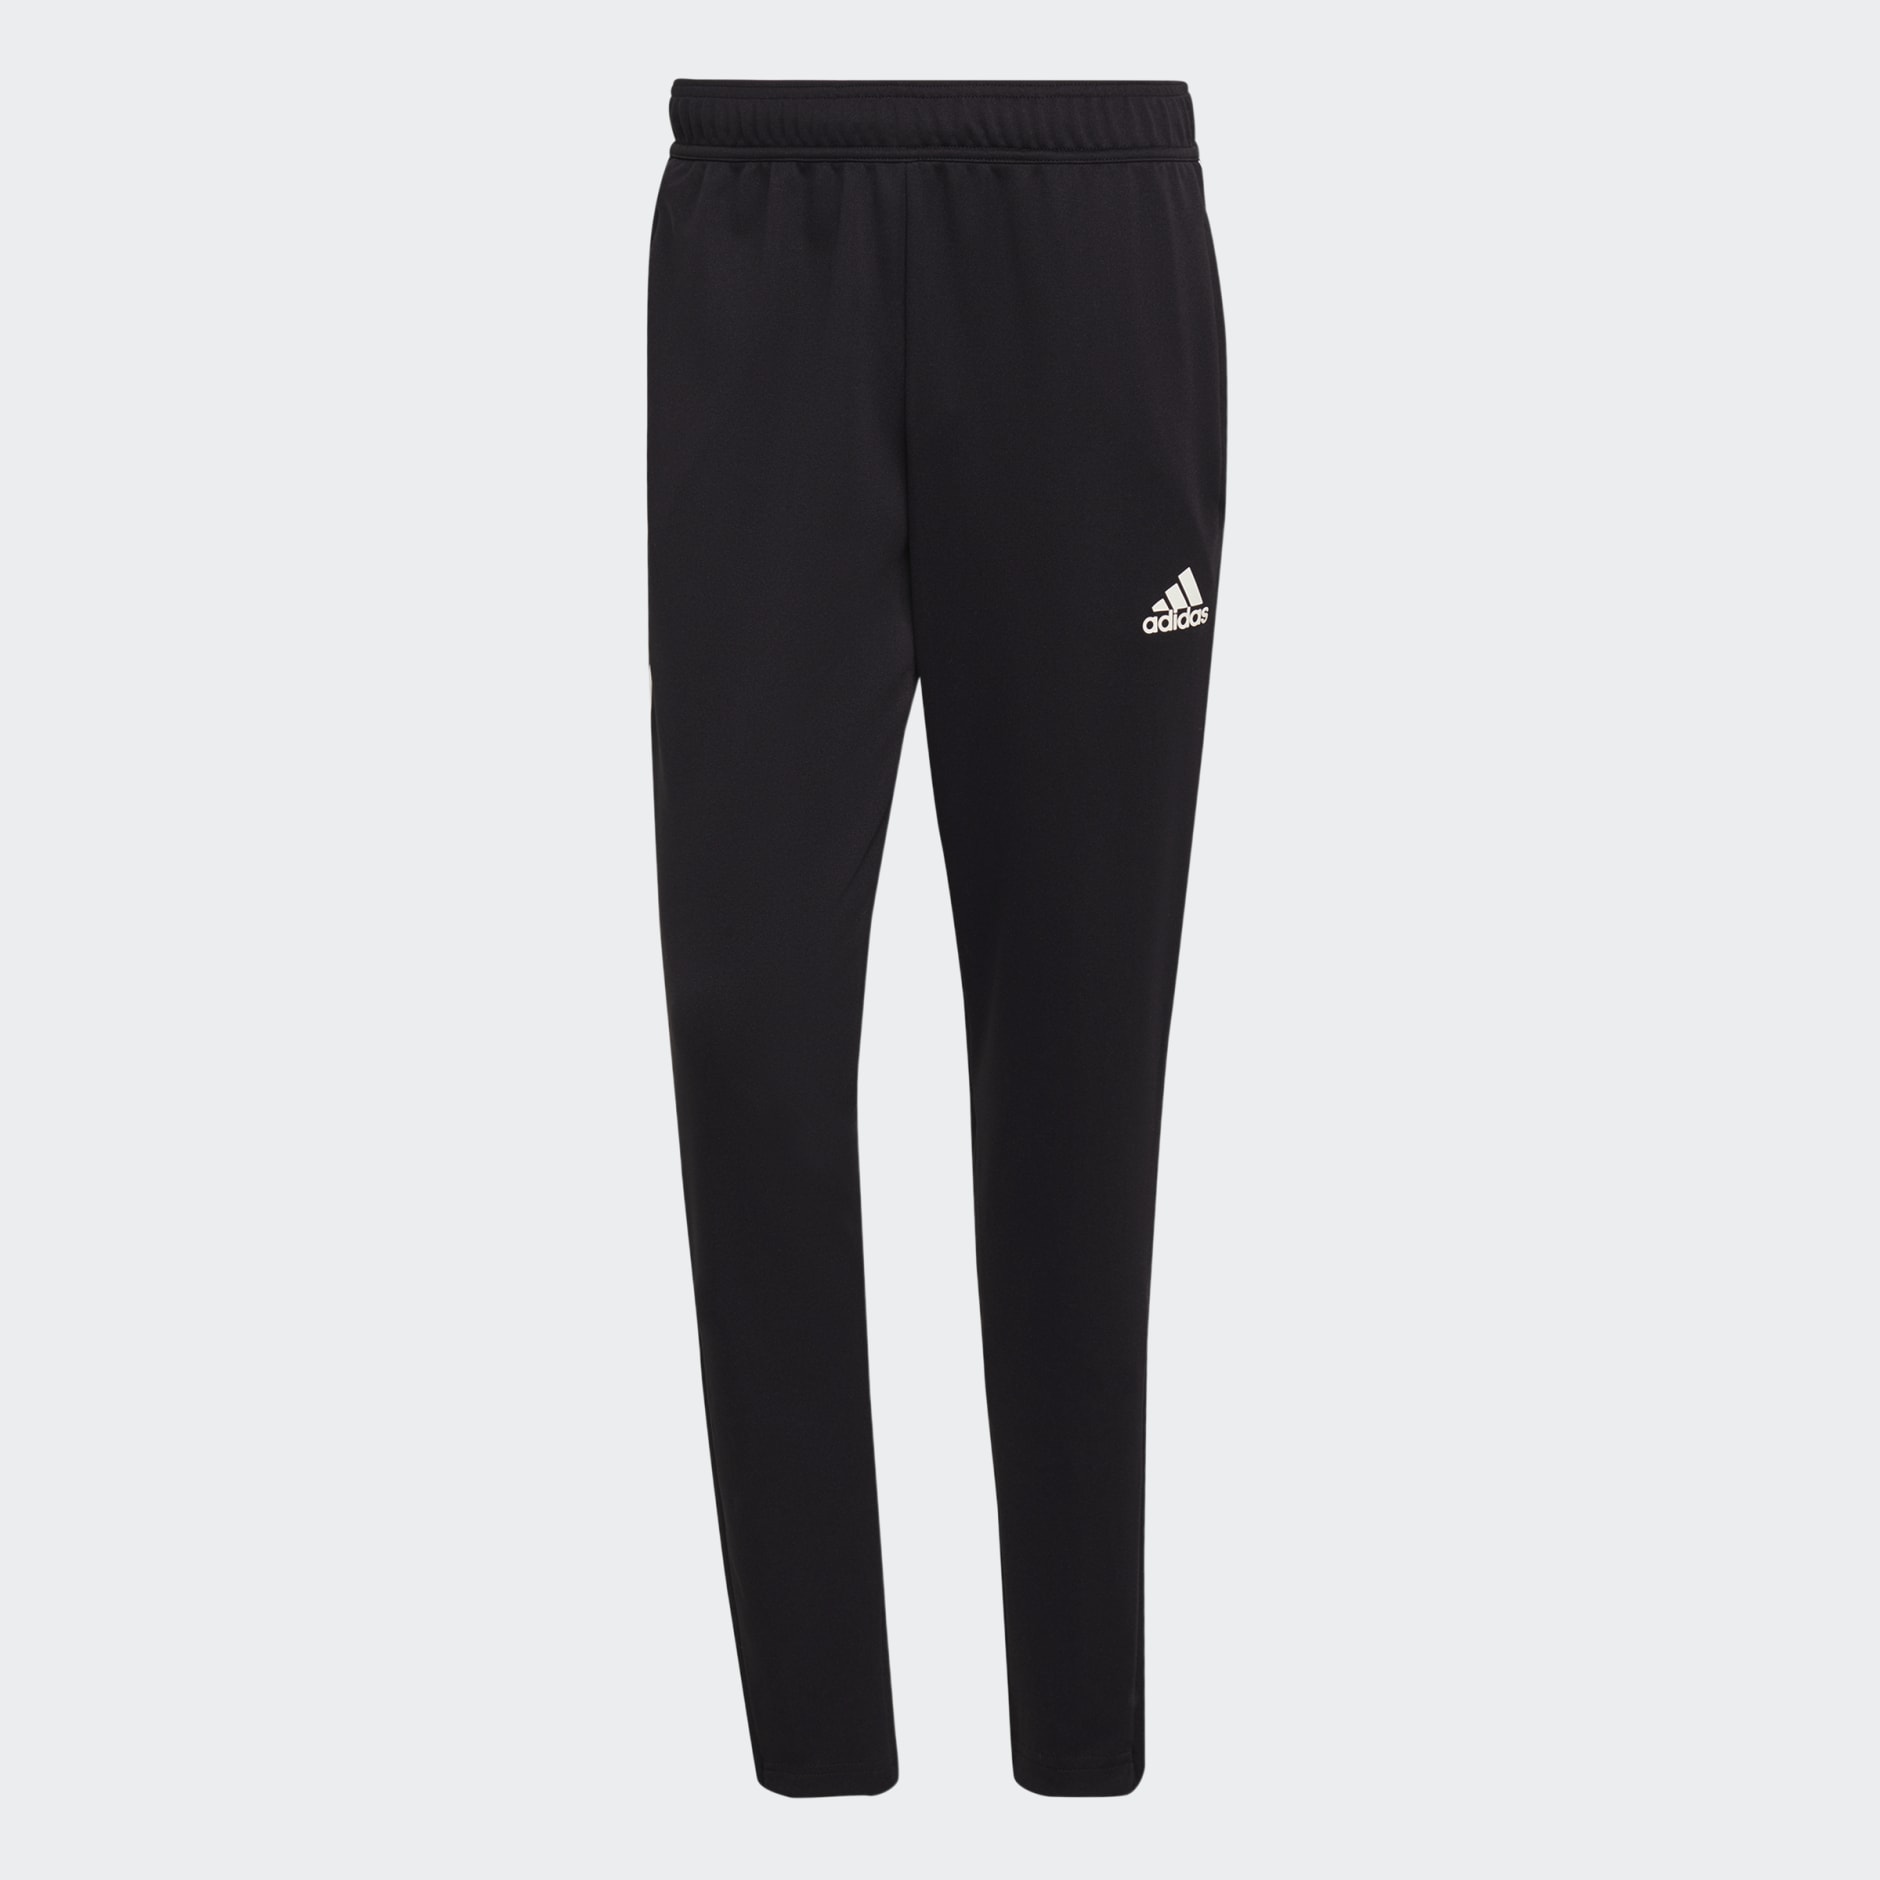 paso lila cubierta Men's Clothing - AEROREADY Sereno Slim Tapered Cut 3-Stripes Pants - Black  | adidas Kuwait